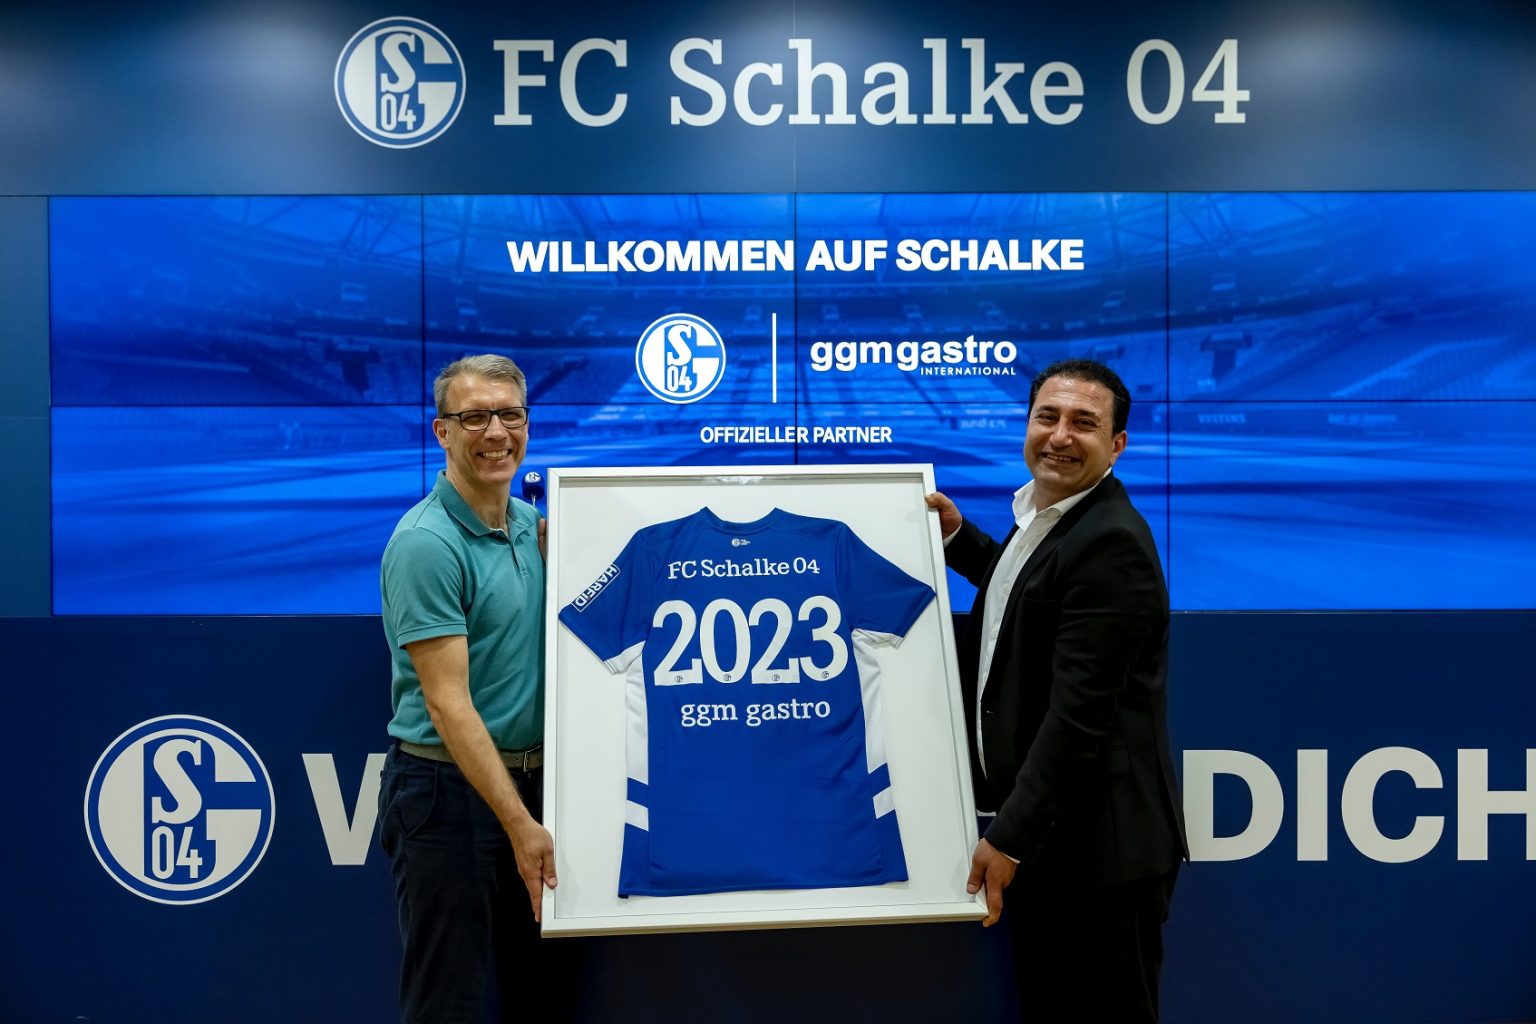 Glück auf! - GGM Gastro har nu sin plads på Schalke!